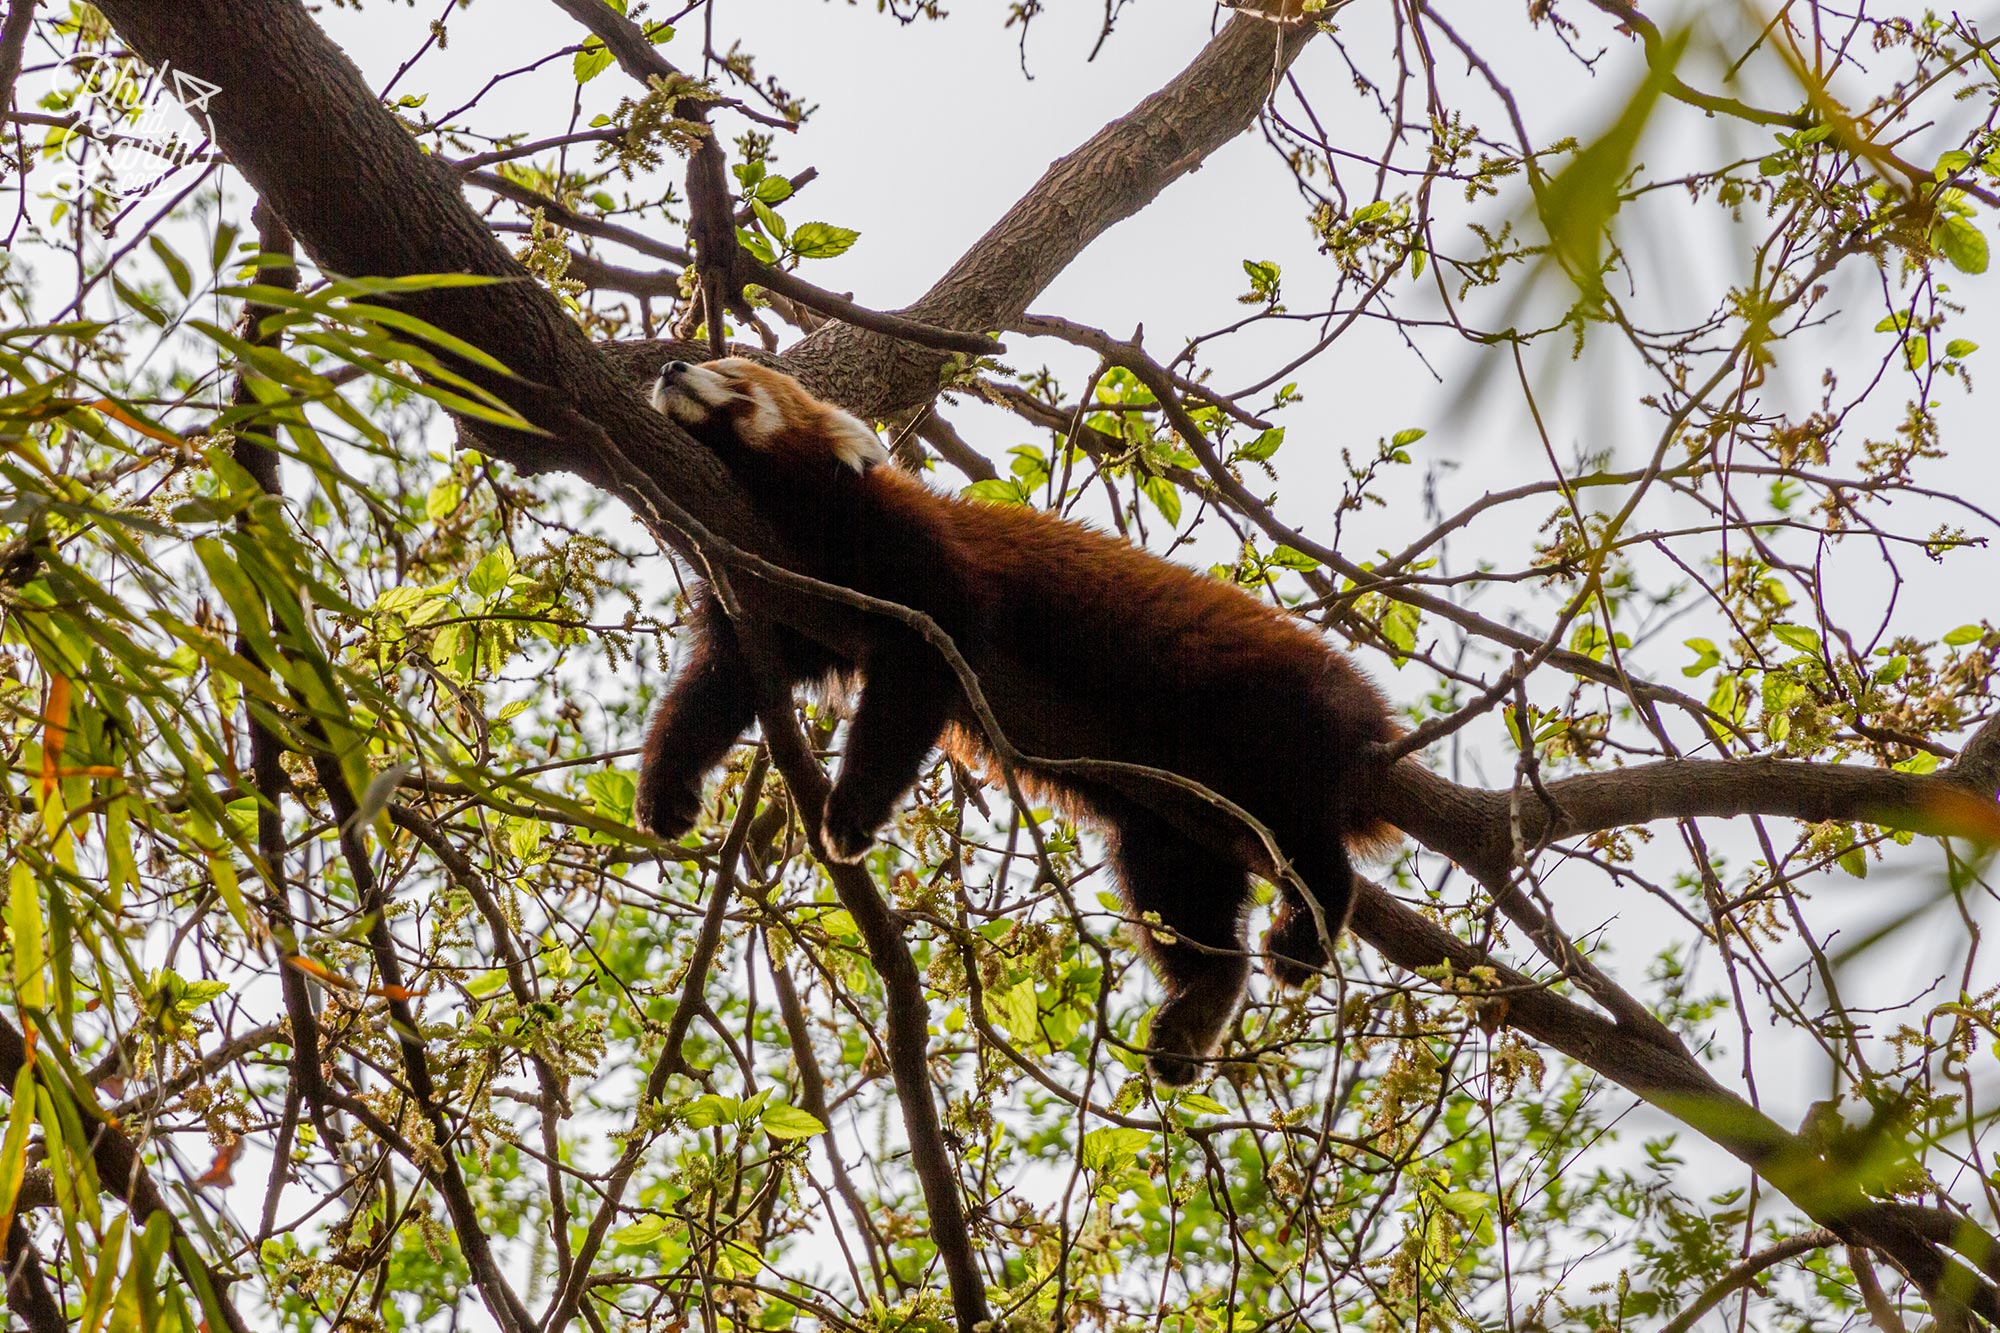 A red panda asleep in a tree